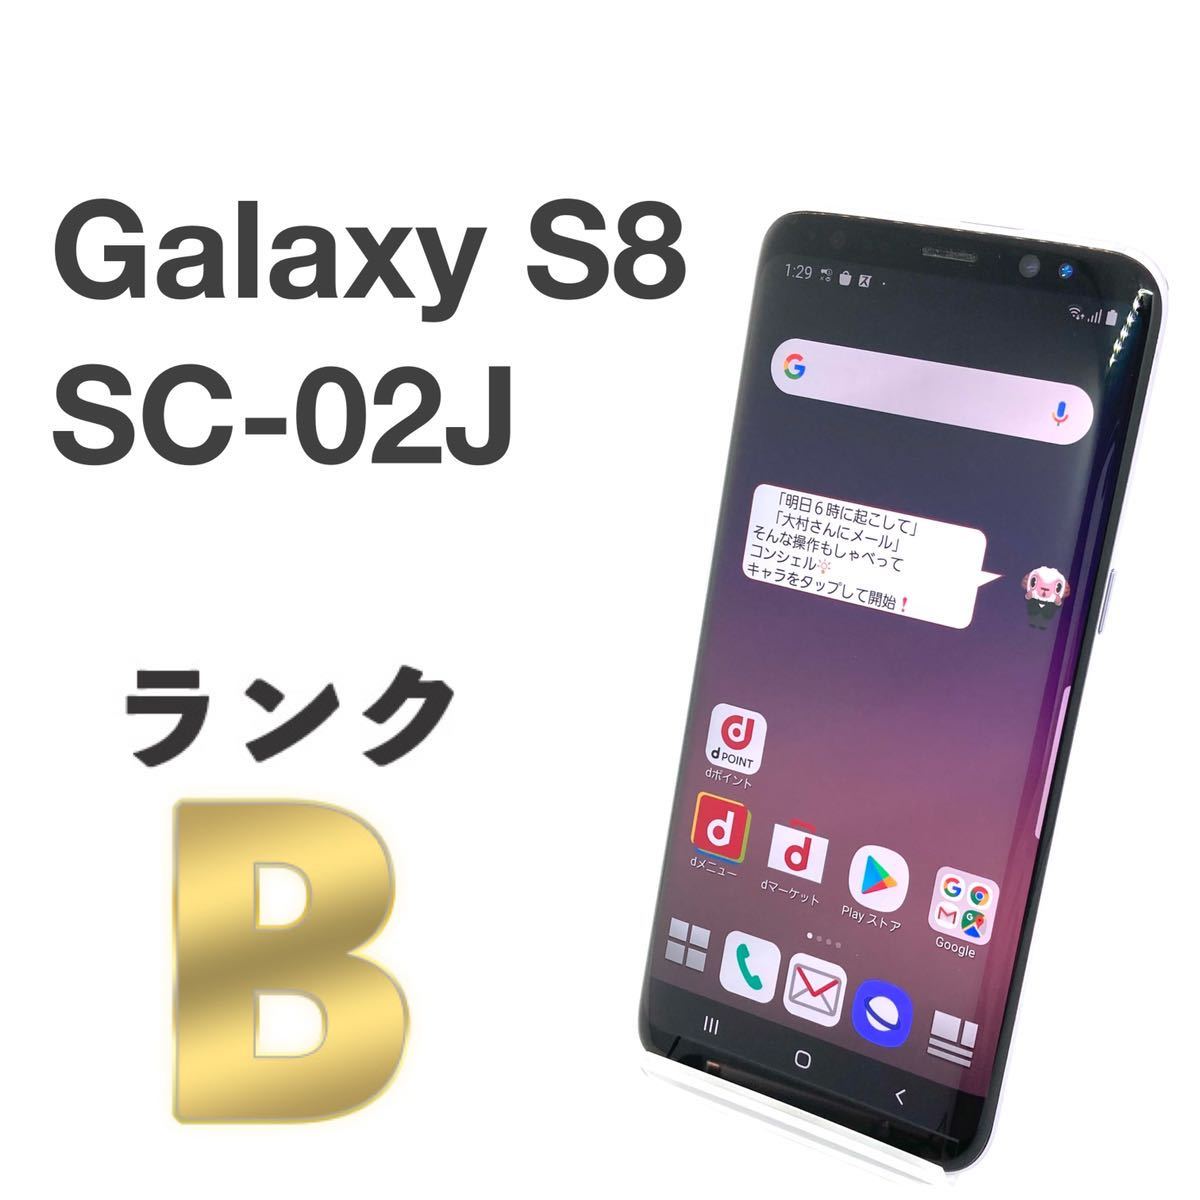 Galaxy S8 Gray 64GB SC-02J SIMフリー docomo-